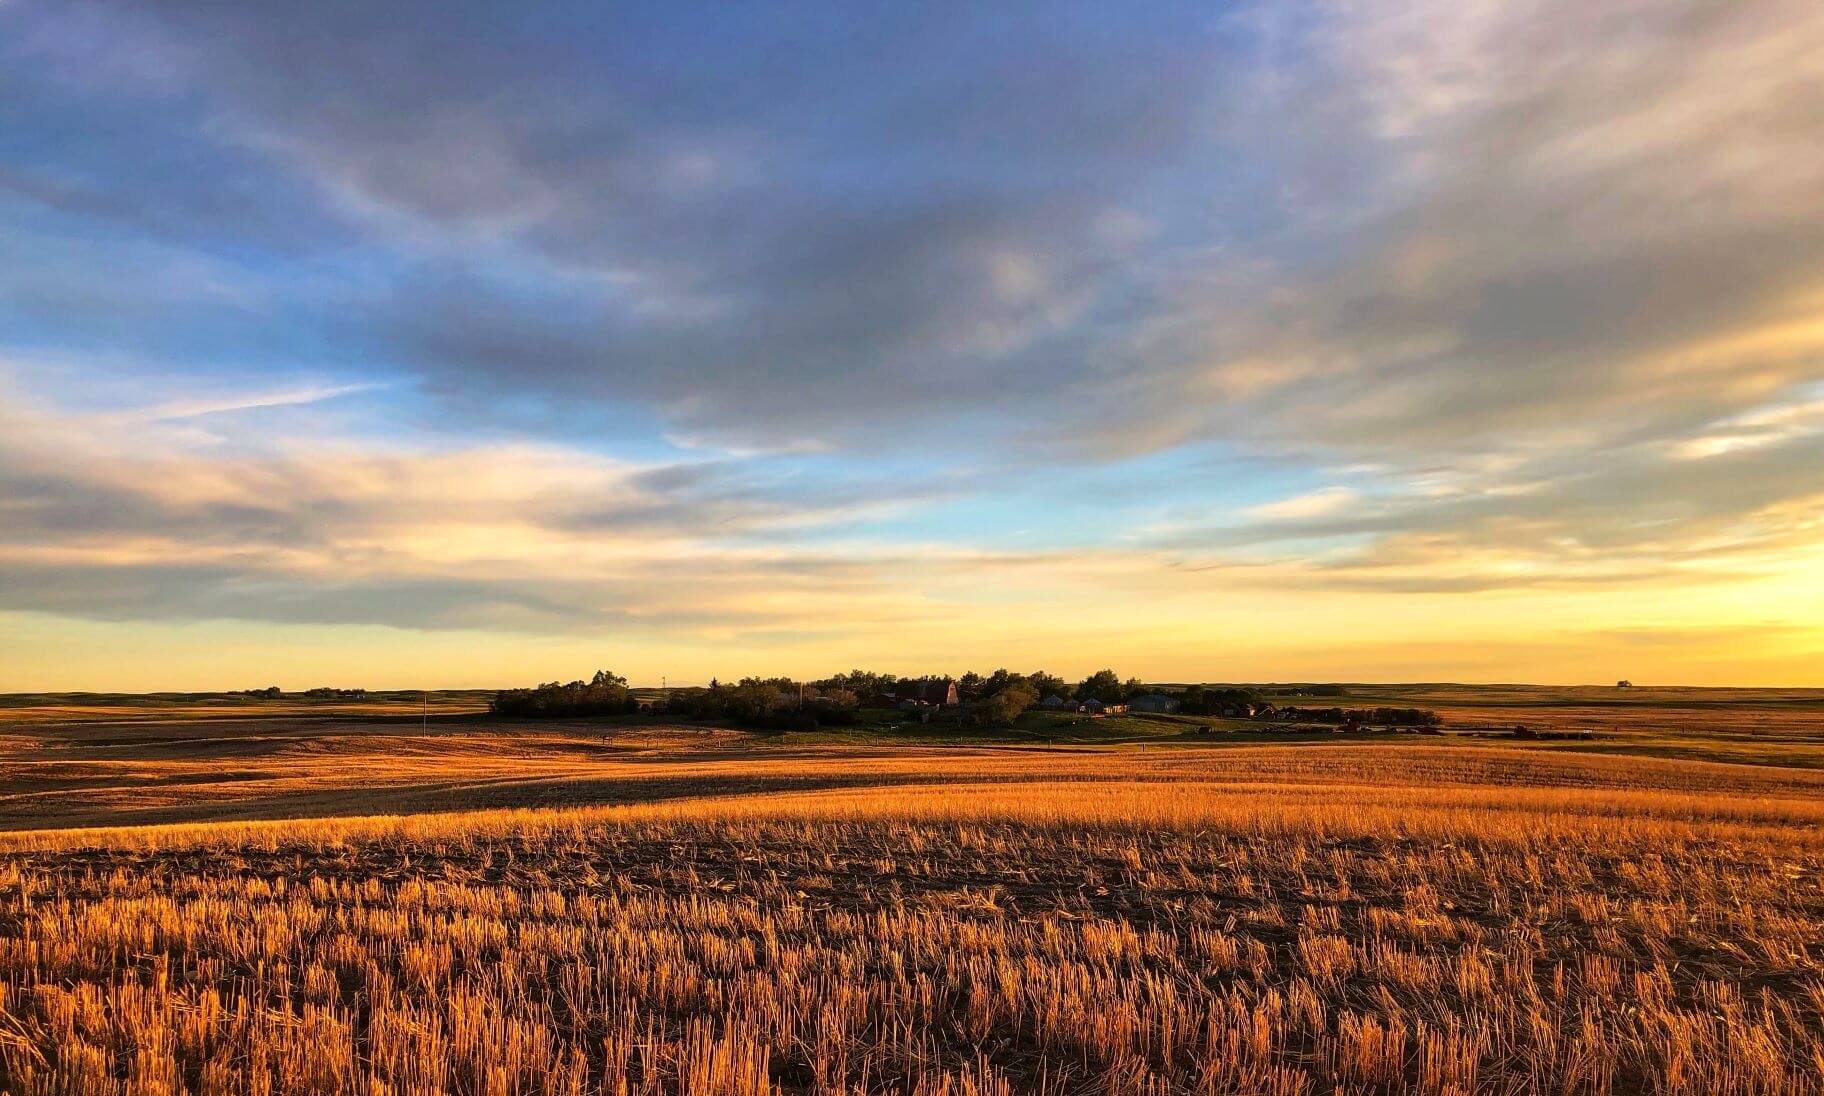 Farm sunset picture from a stubble field in Saskatchewan